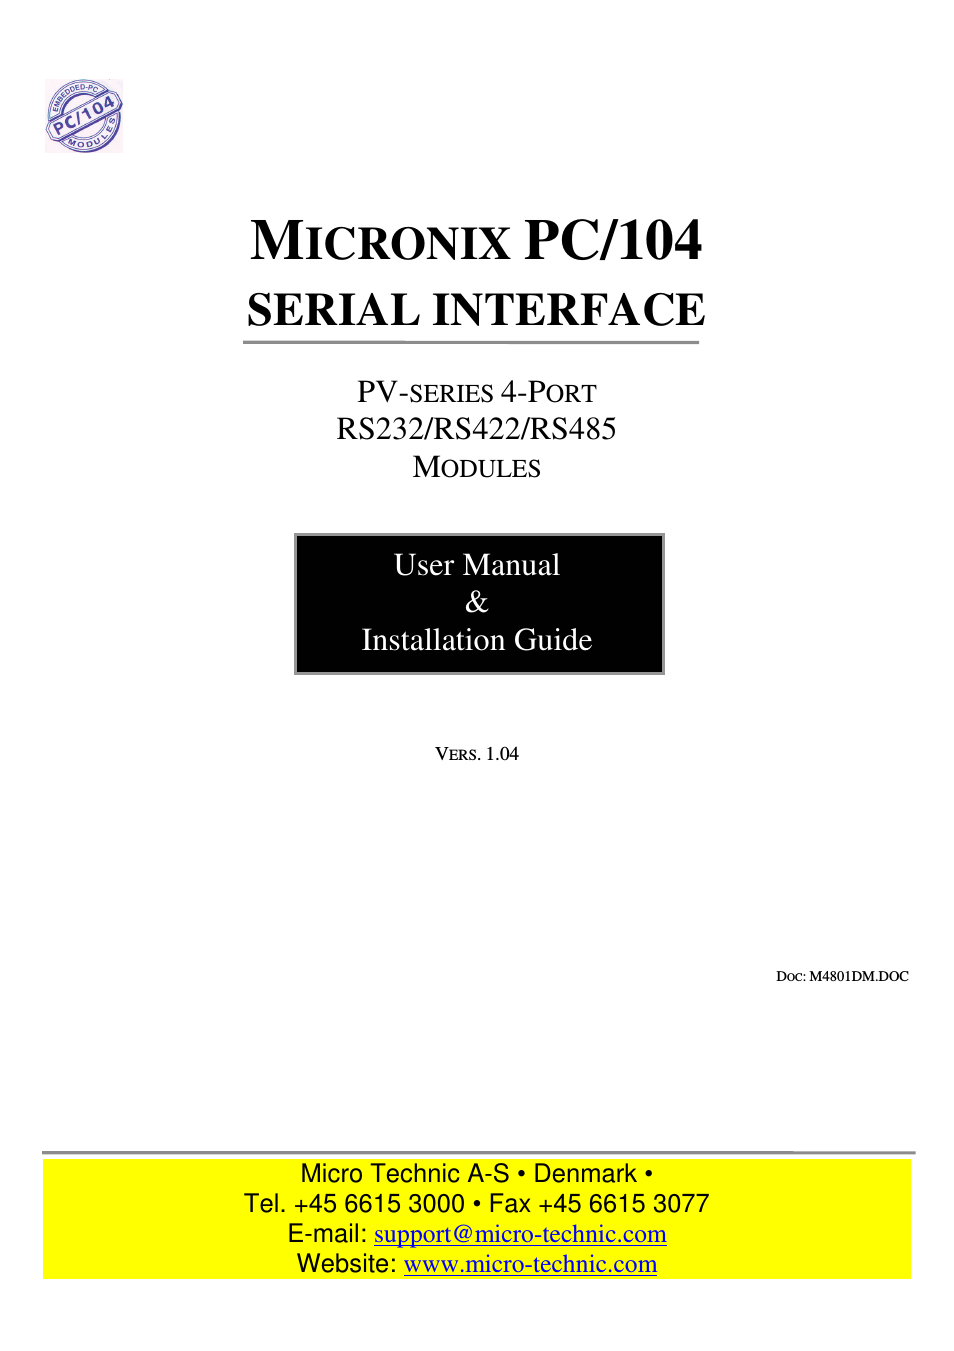 Micronix PV Series